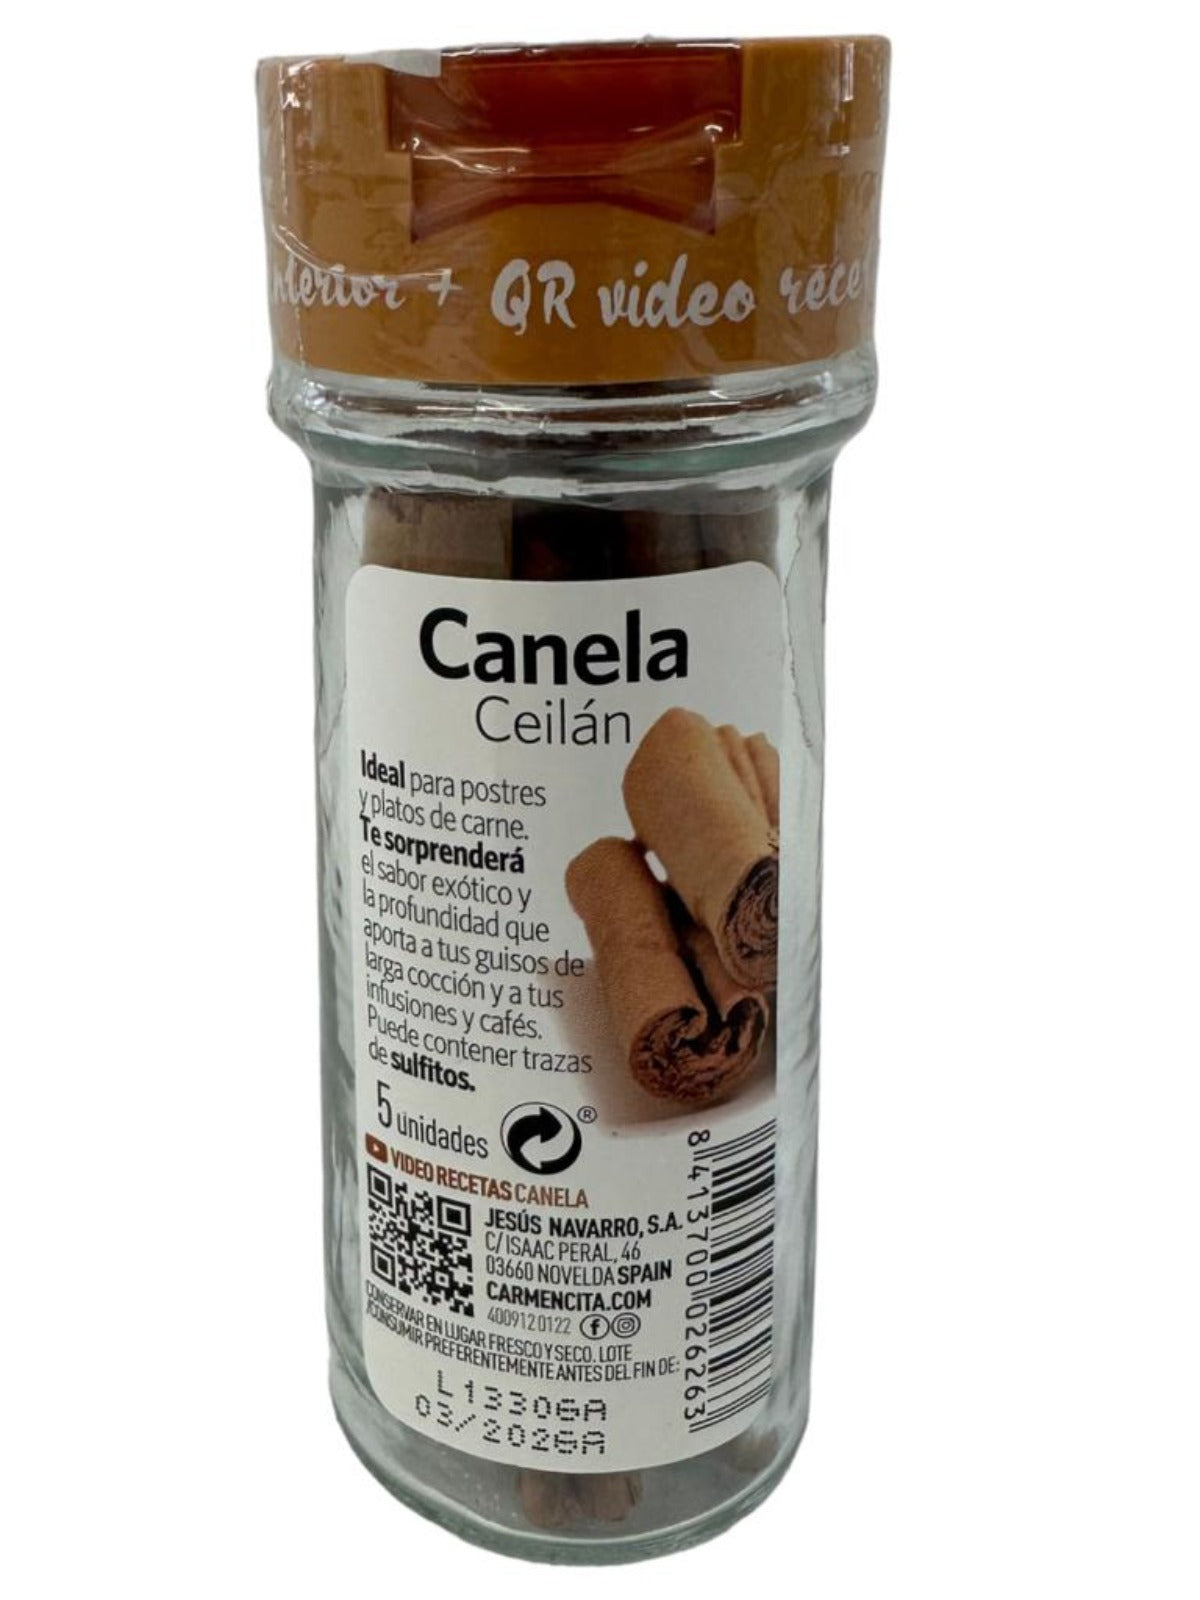 Carmencita Canela Cinnamon Sticks 5 pieces 10g